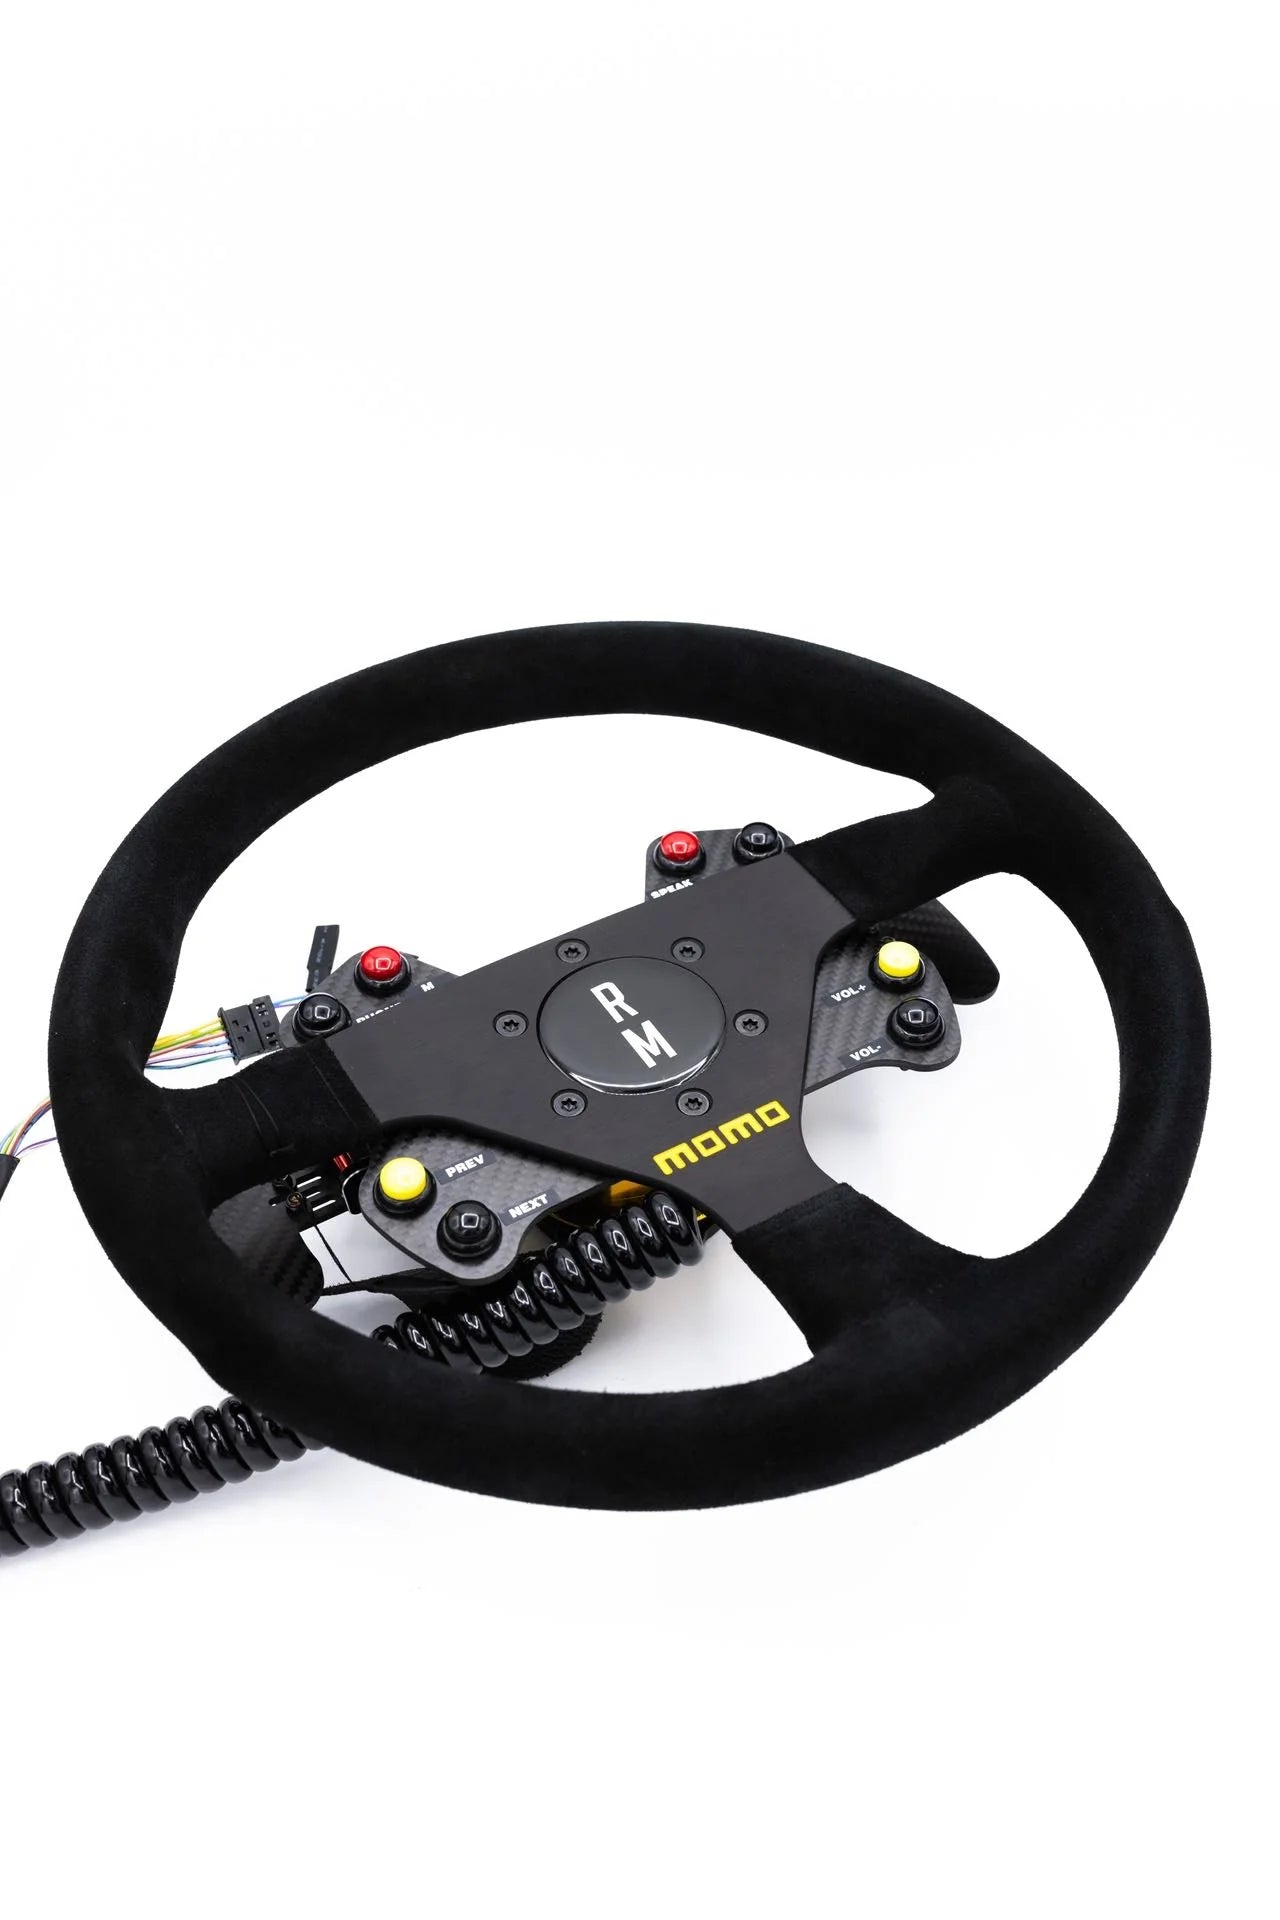 RM Engineering E9X M3 Racing Steering Wheel V2 - 6MT